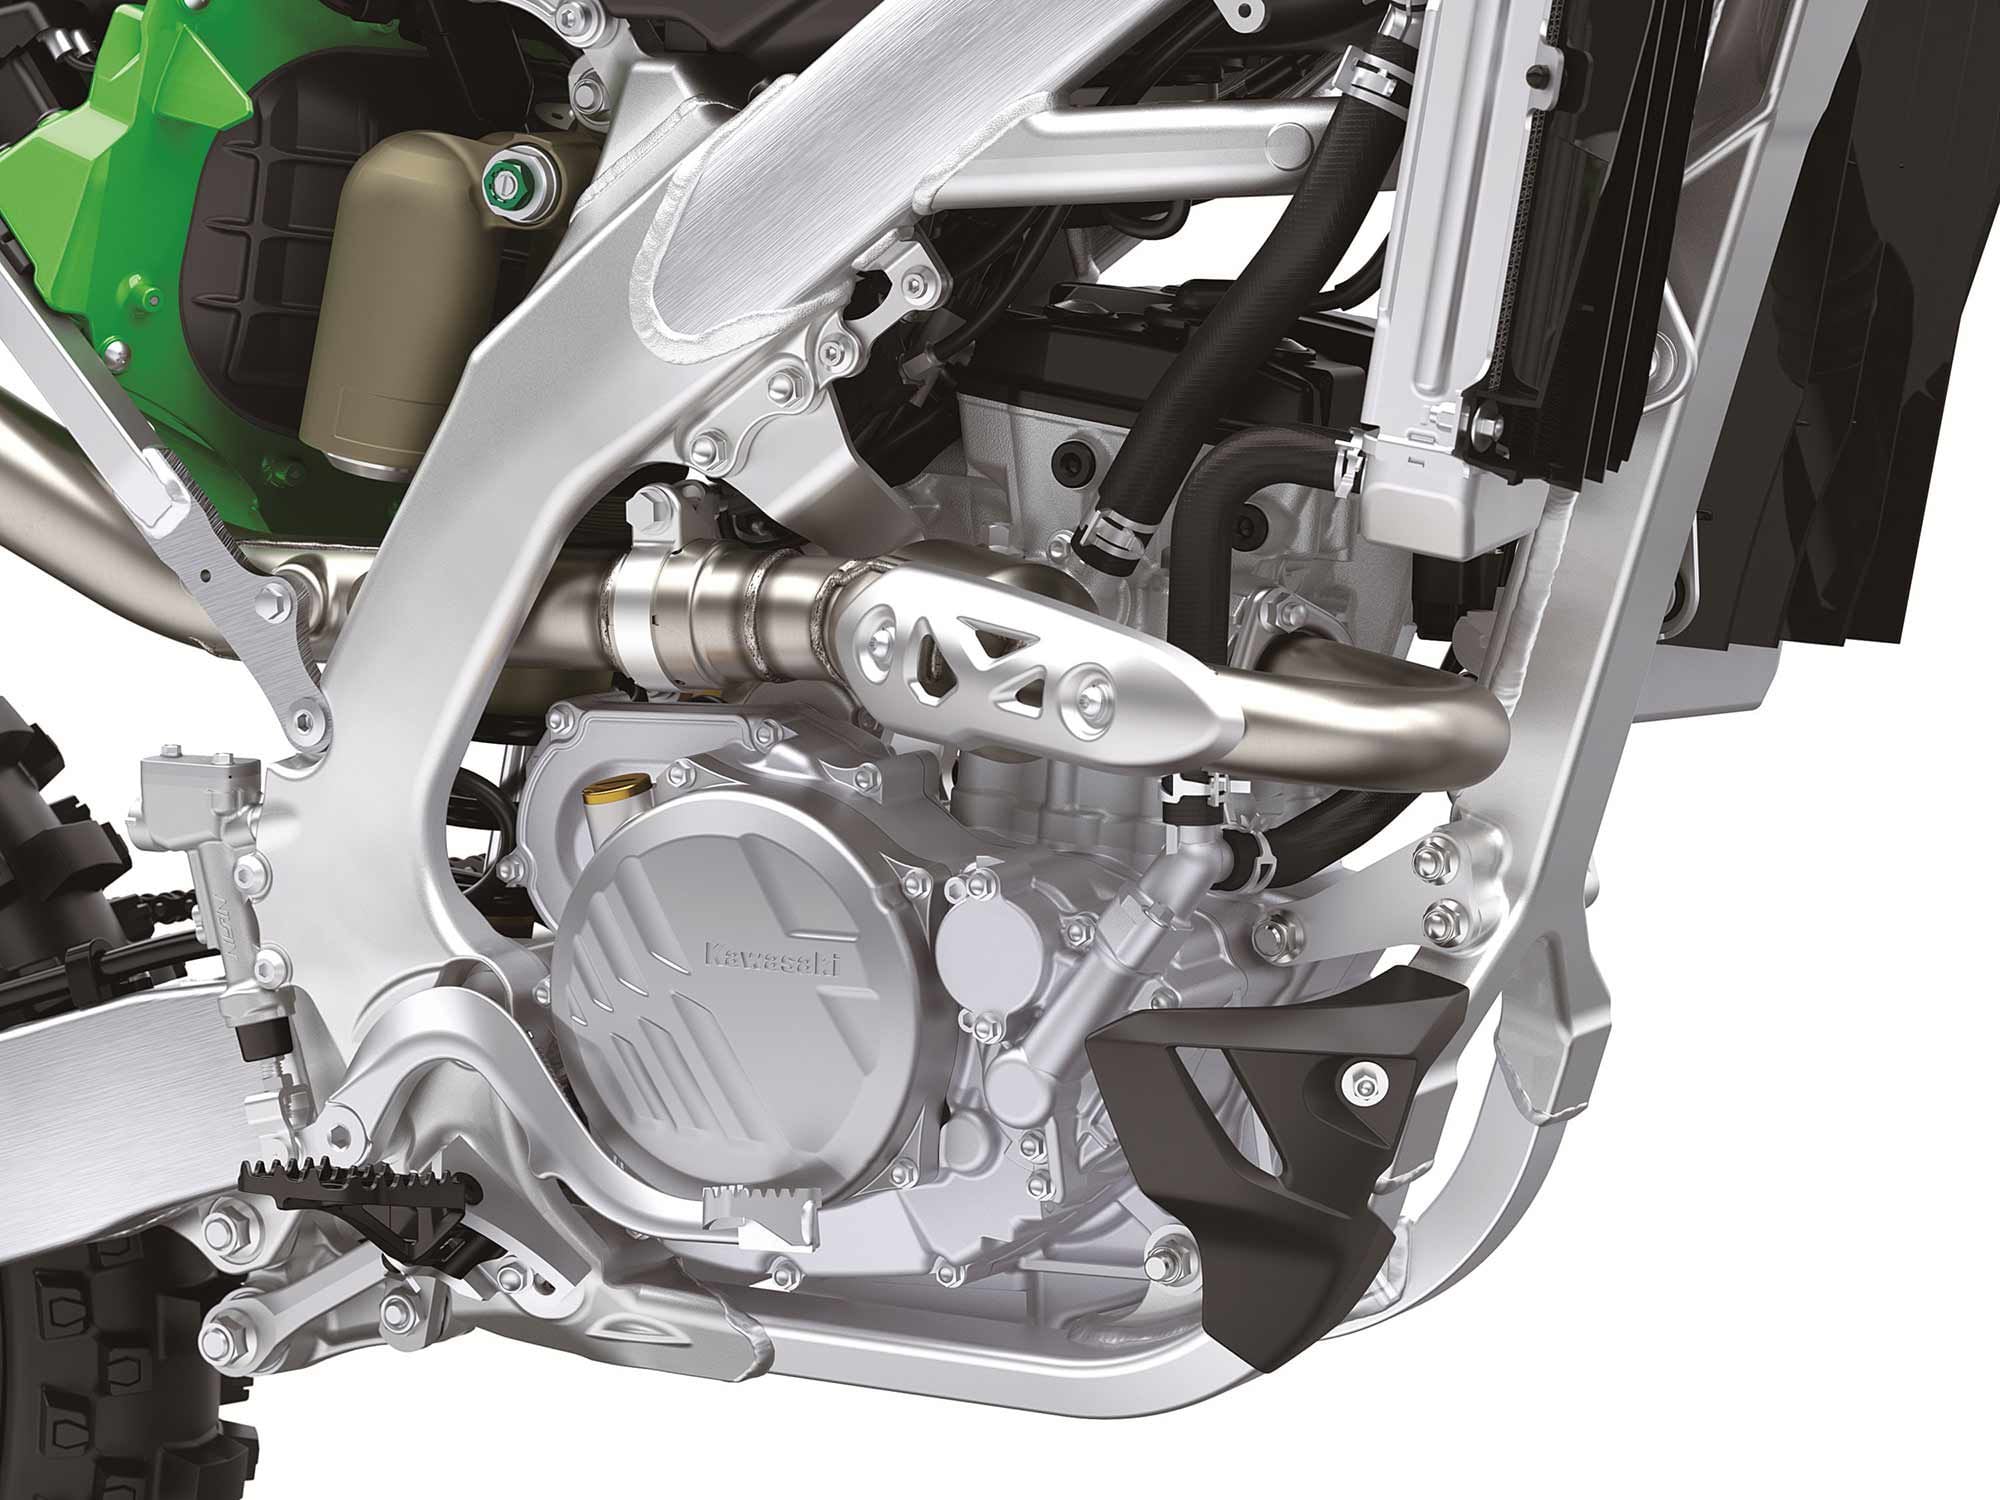 The revised 249cc engine will provide better power across the rev range.